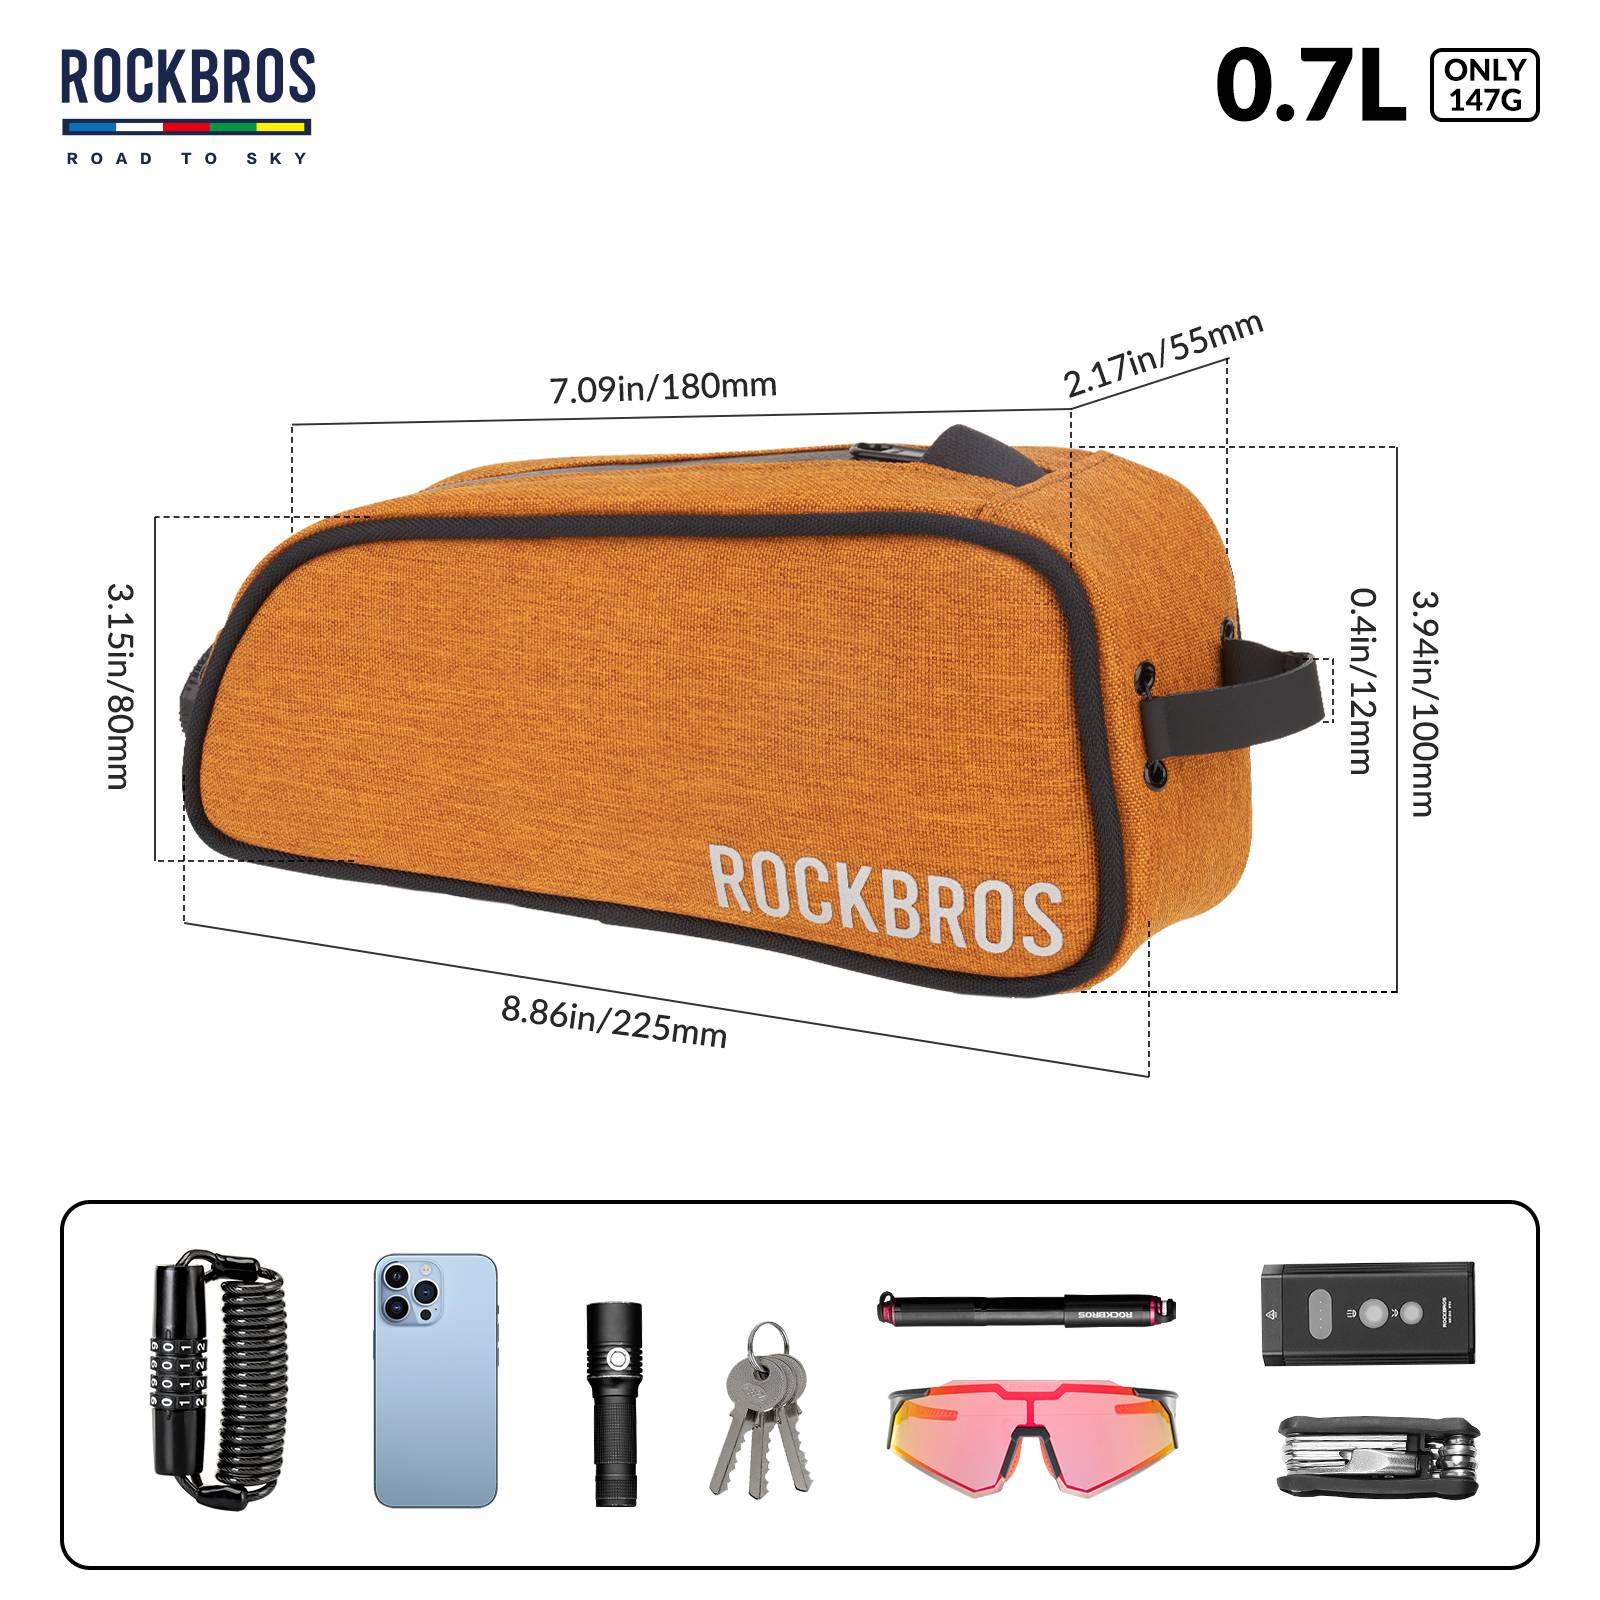 ROCKBROS Bicycle Top Tube Bag Frame Bag 0.7L Reflective Bicycle Bag #Color_Orange